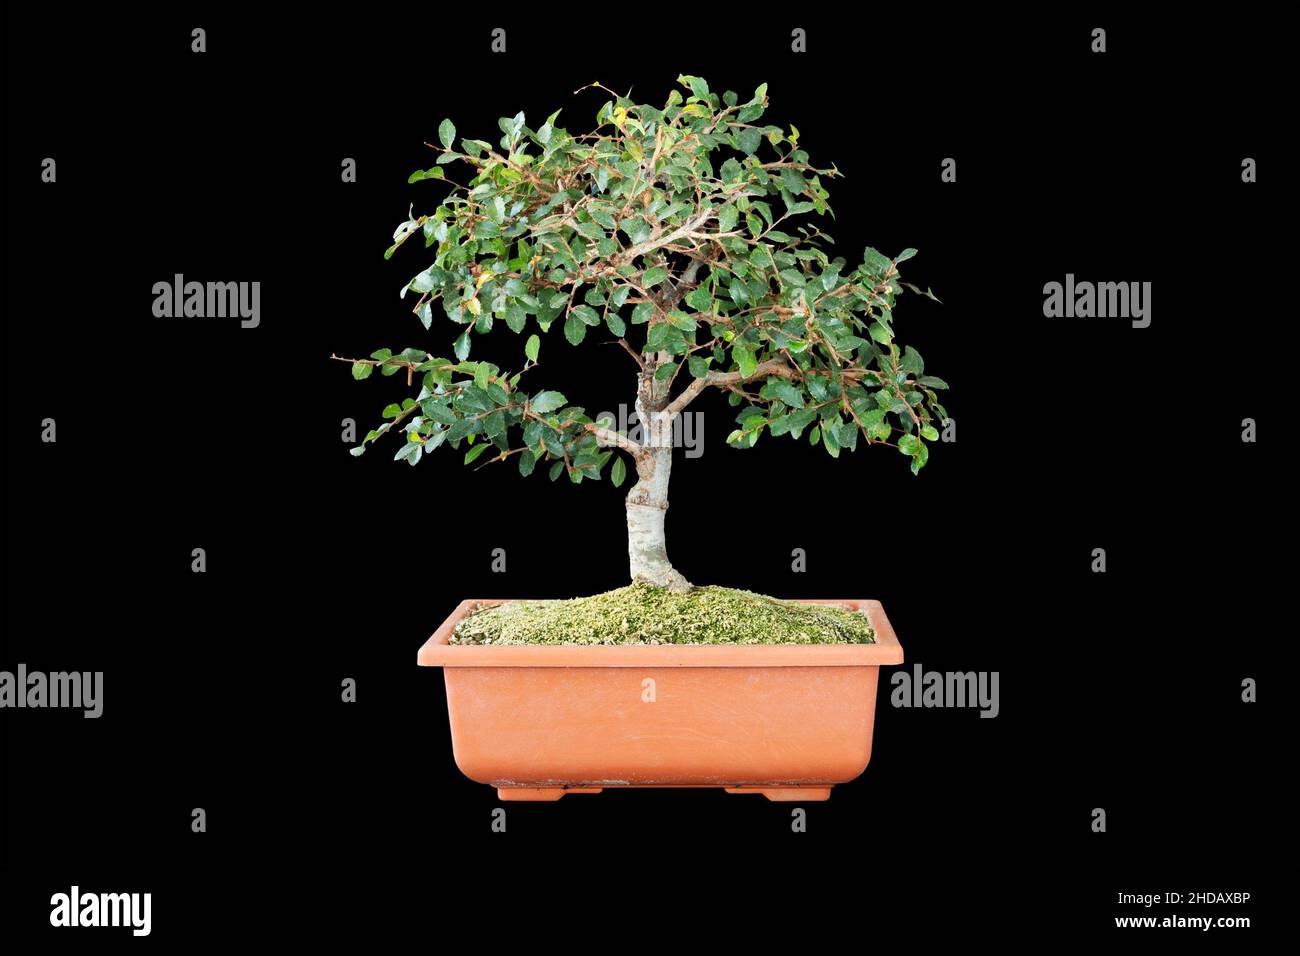 chinese elm bonsai on training pot, isolated over dark background Stock Photo